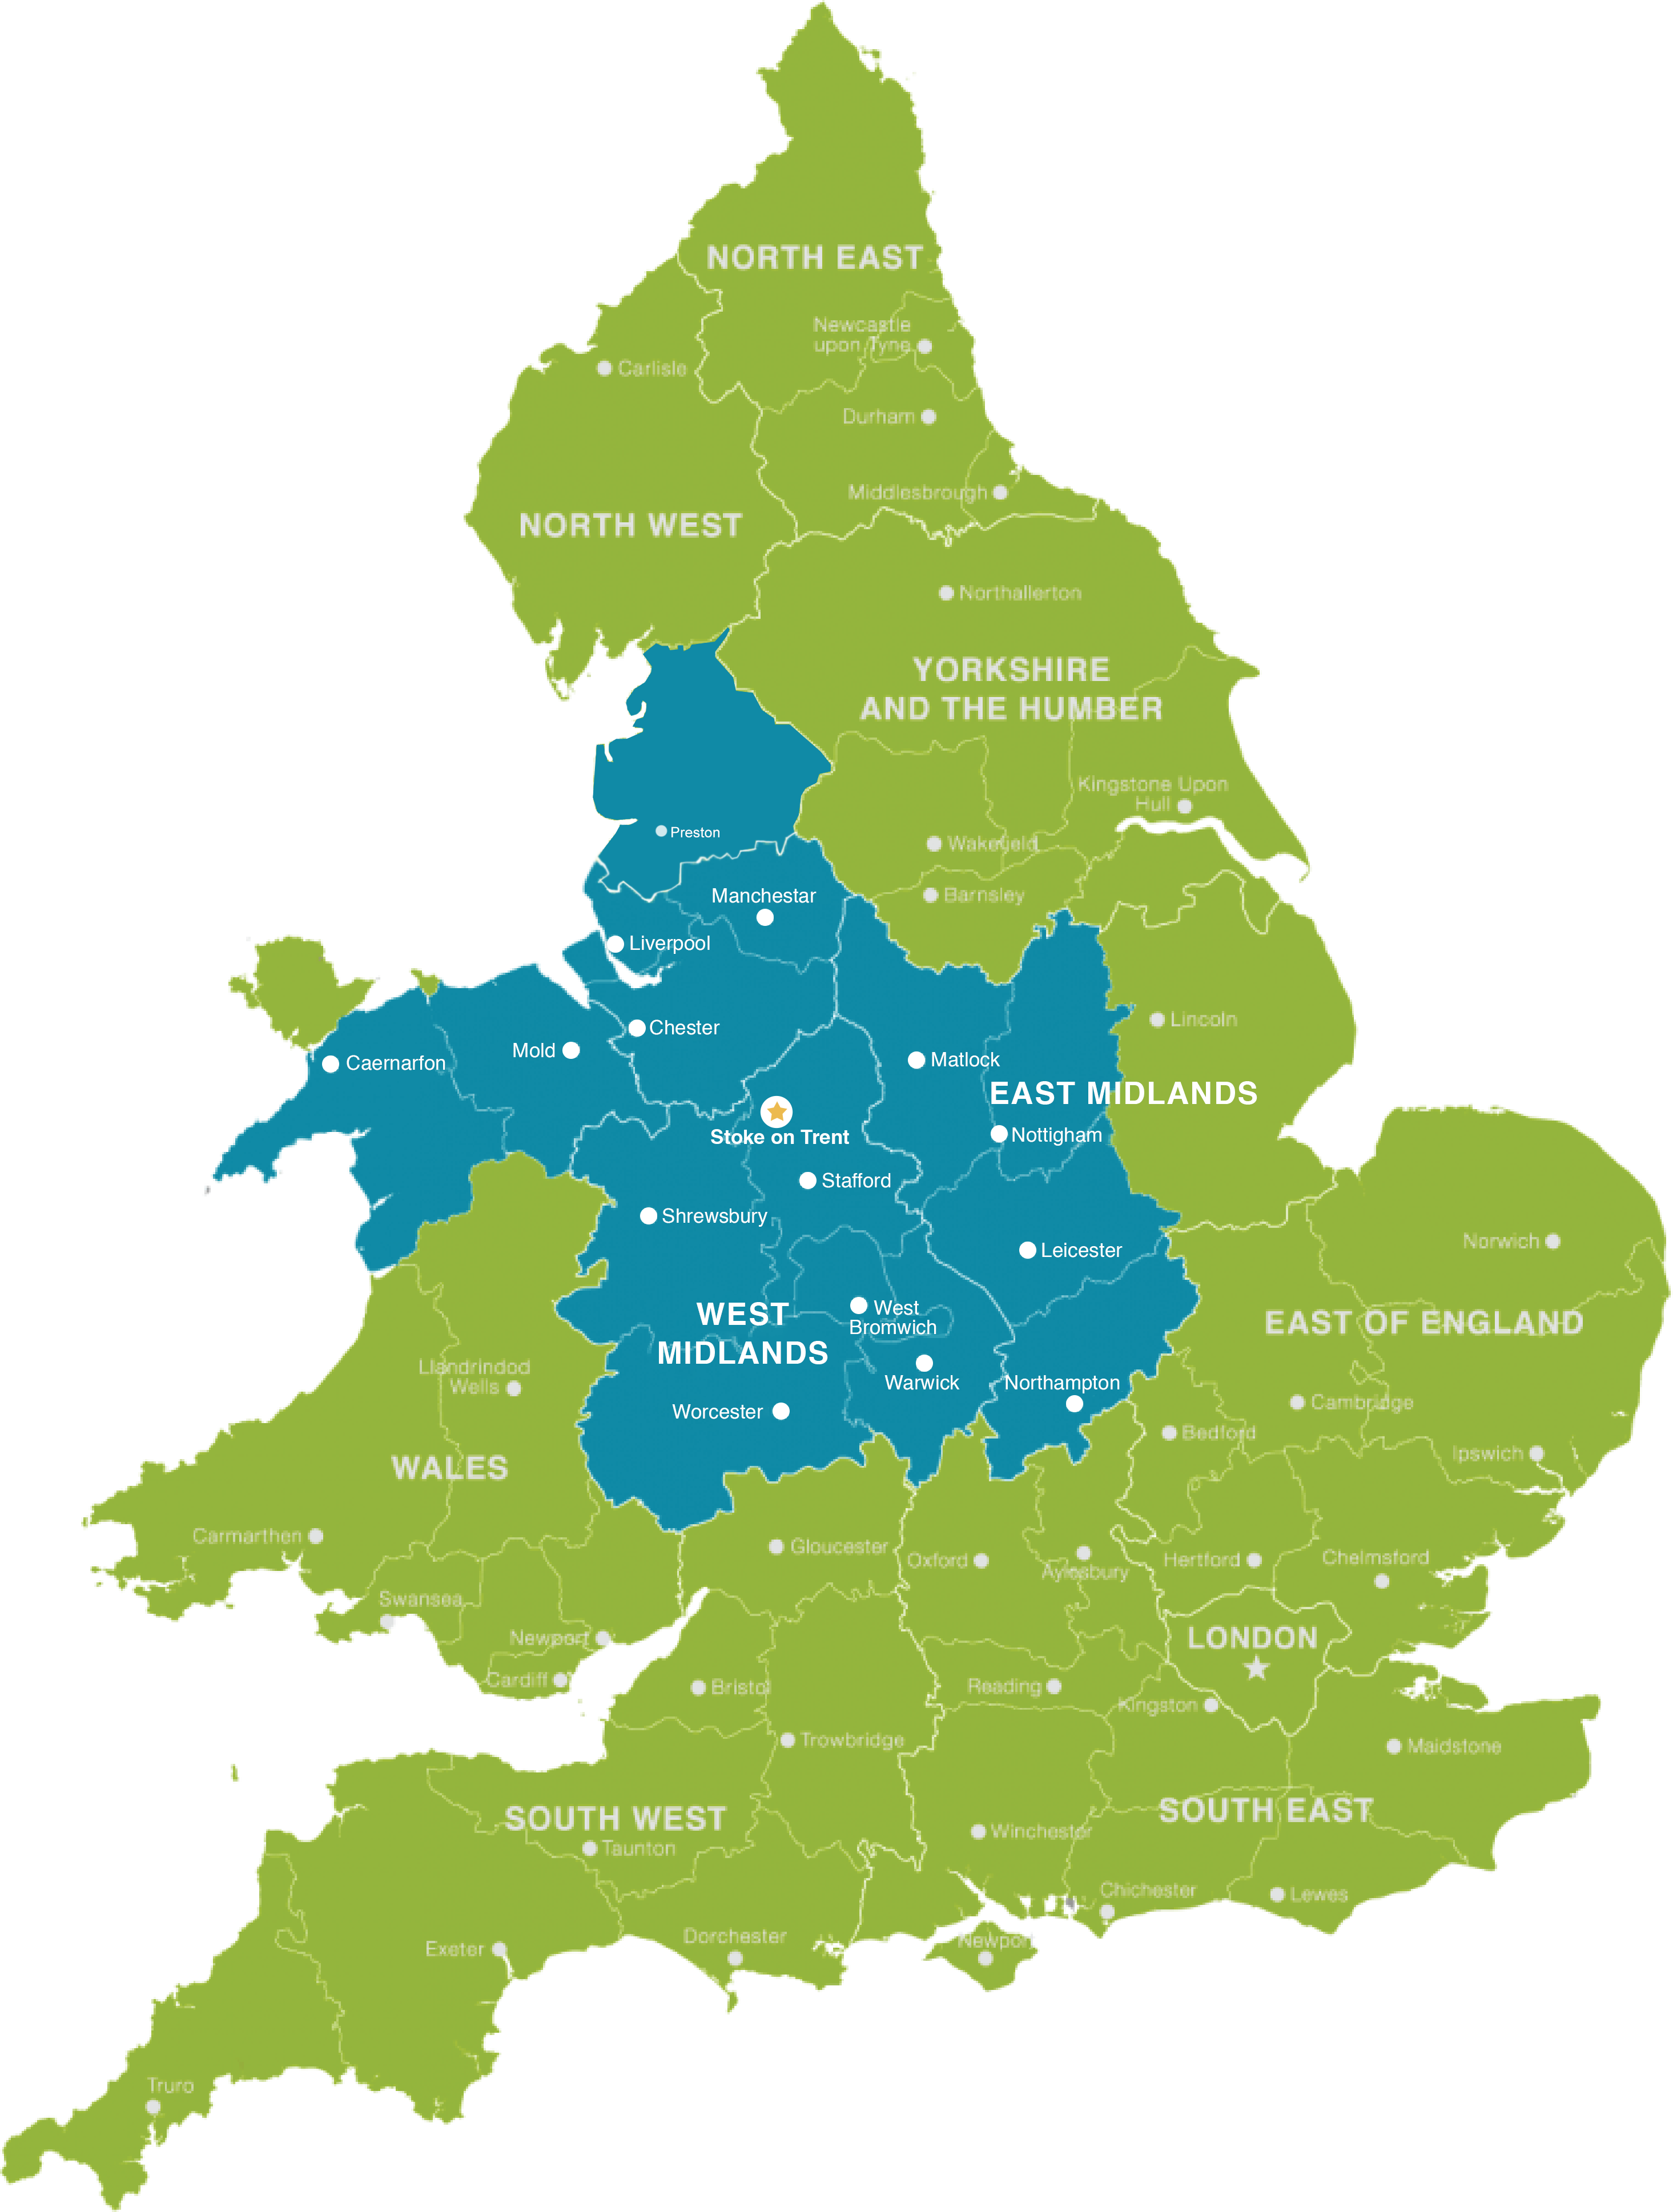 Pentagon Food Group food distribution areas - East Midland and West Midlands in United Kingdom 